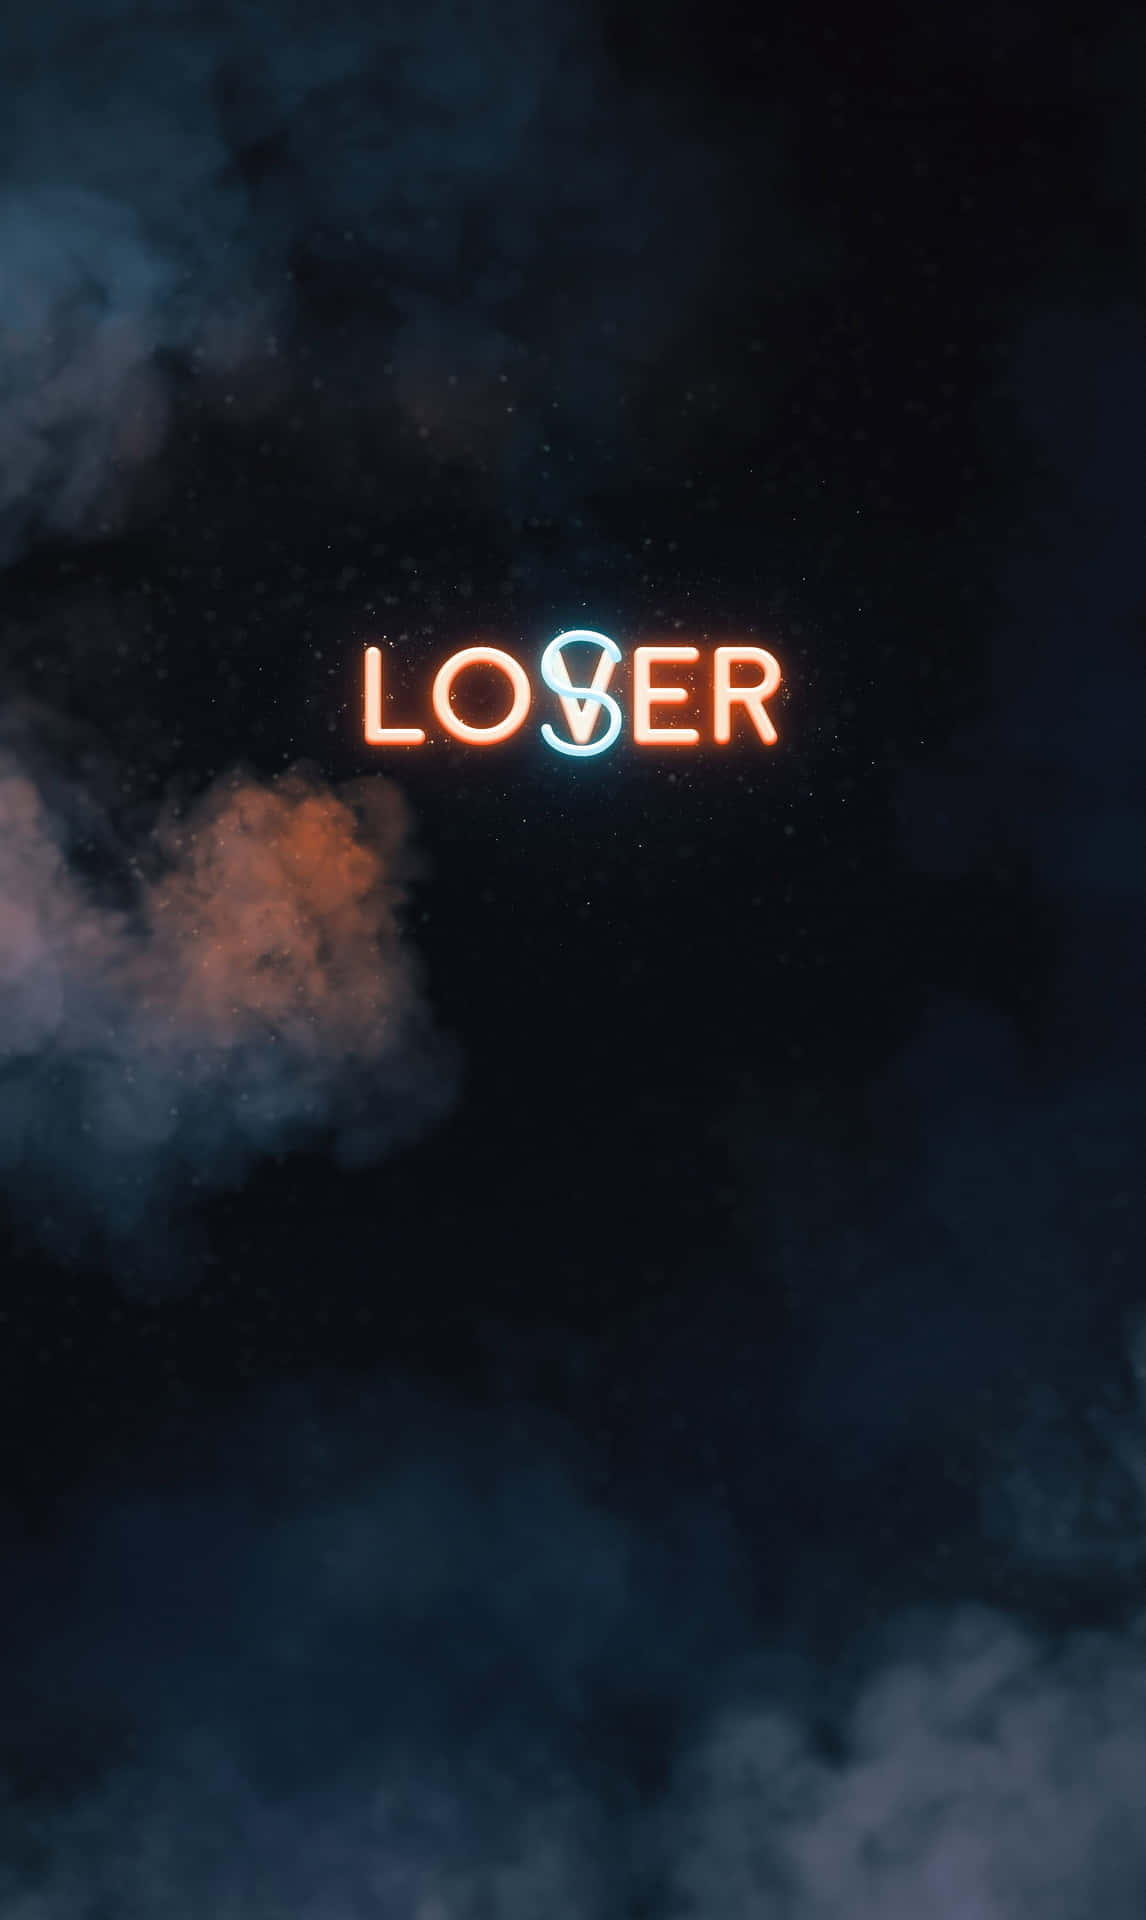 Free Loser Wallpaper, Loser Wallpaper Download - WallpaperUse - 1